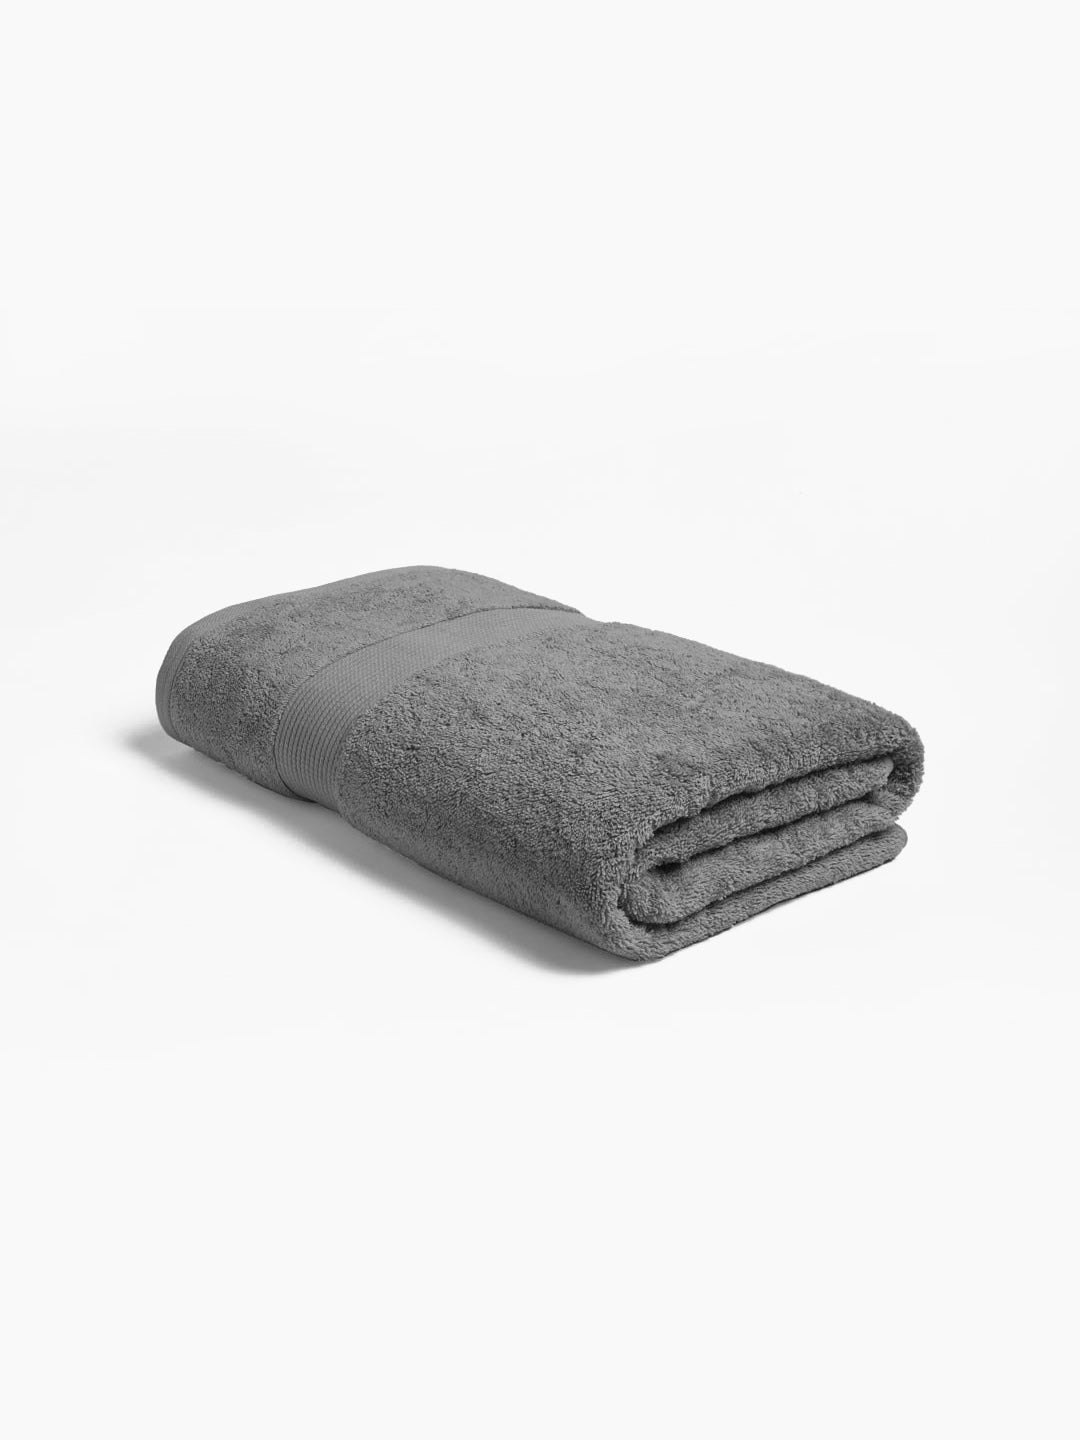 Bath Towel 600 GSM - Dark Grey